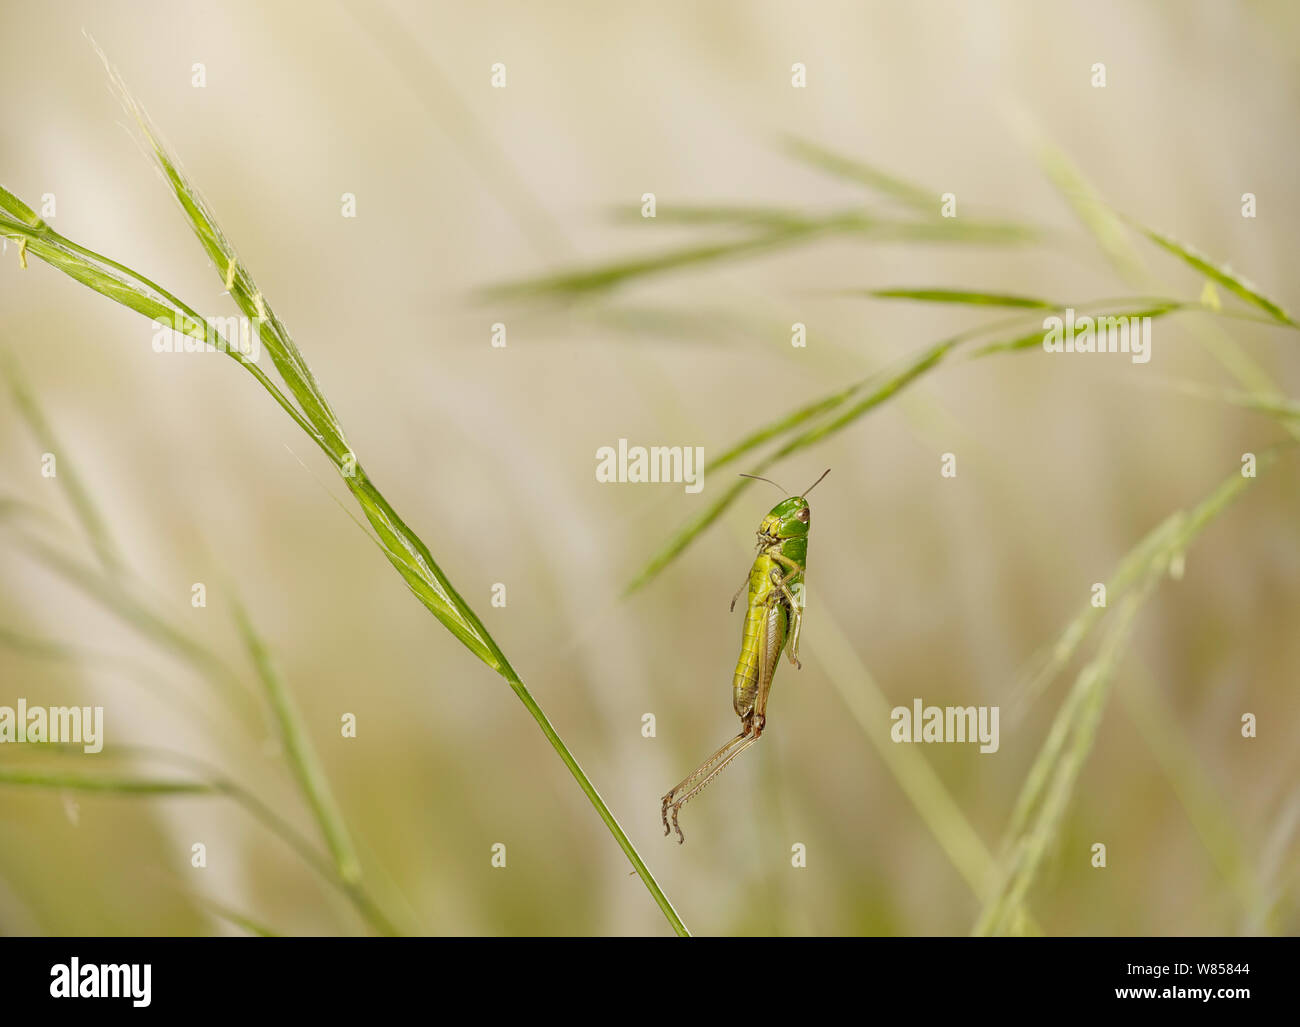 Prato grasshopper (Chorthippus parallelus) che saltava, condizioni controllate. Foto Stock